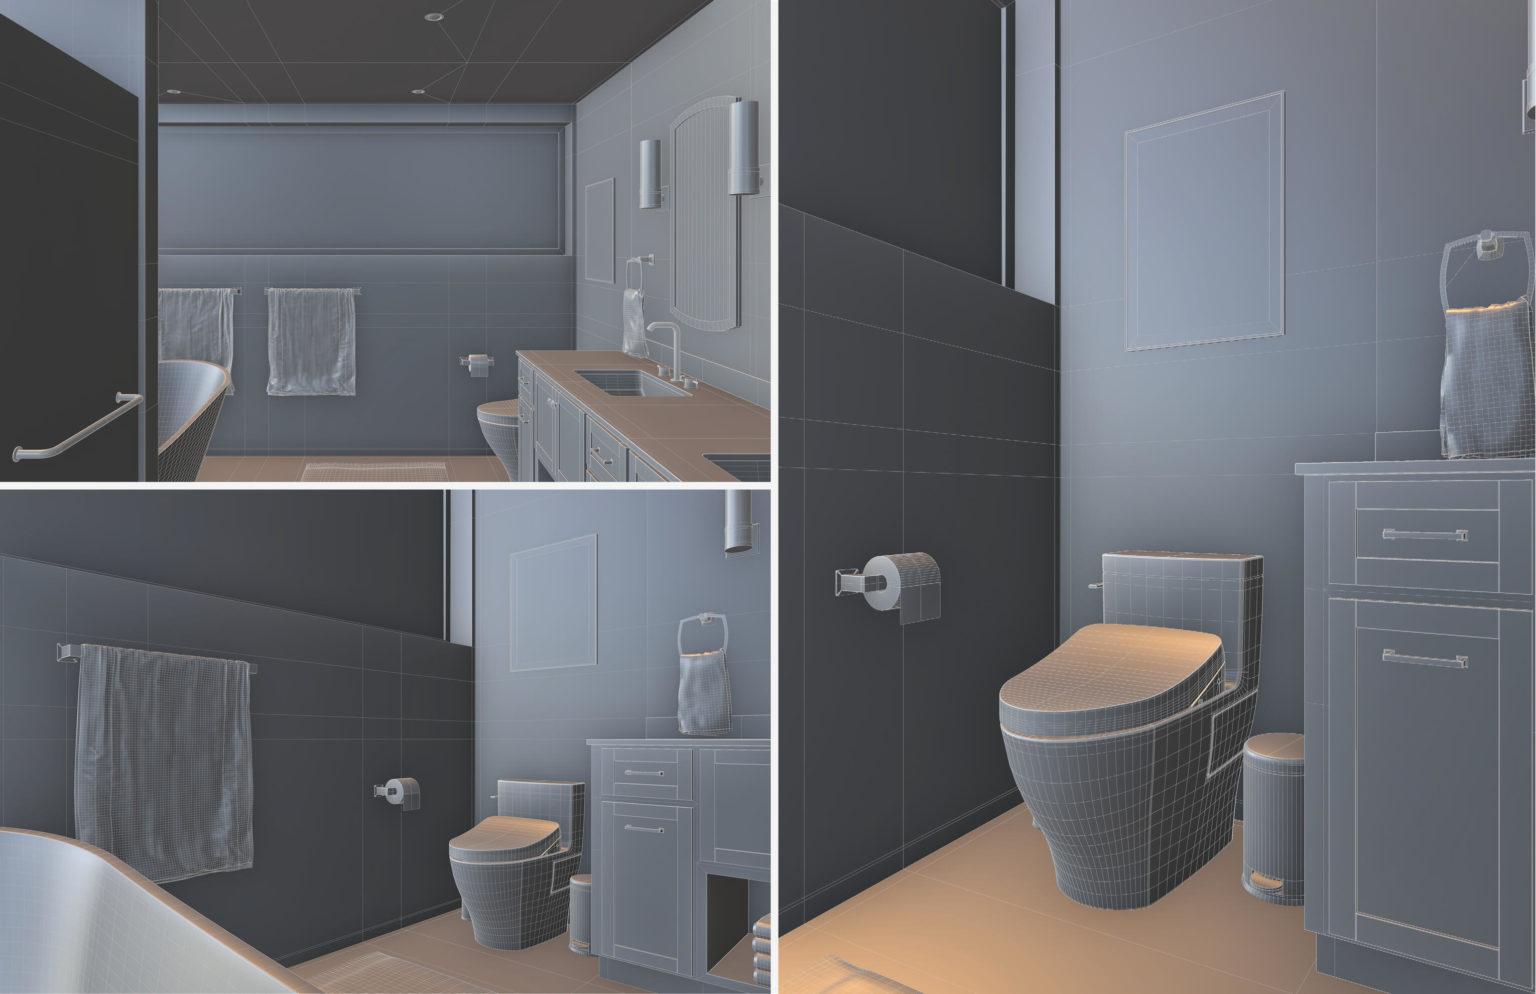 Michal Dziewiatkowski, Bathroom Space - Interior and Product Rendering - Wireframe3